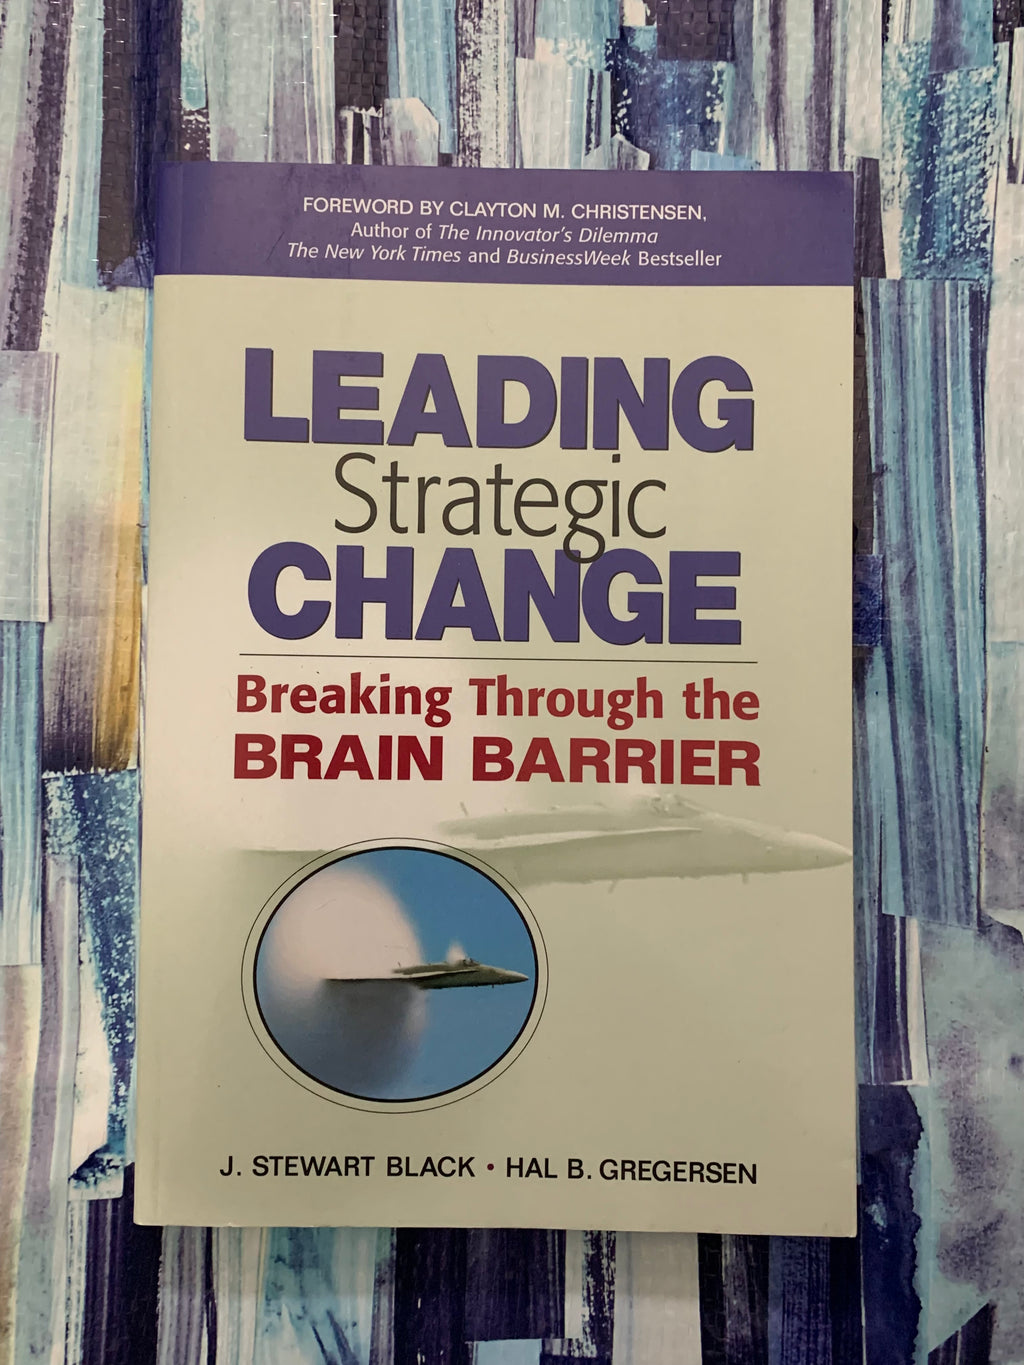 Leading Strategic Change: Breaking Through the Brain Barrier- By J. Stewart Black and Hal B. Gregersen